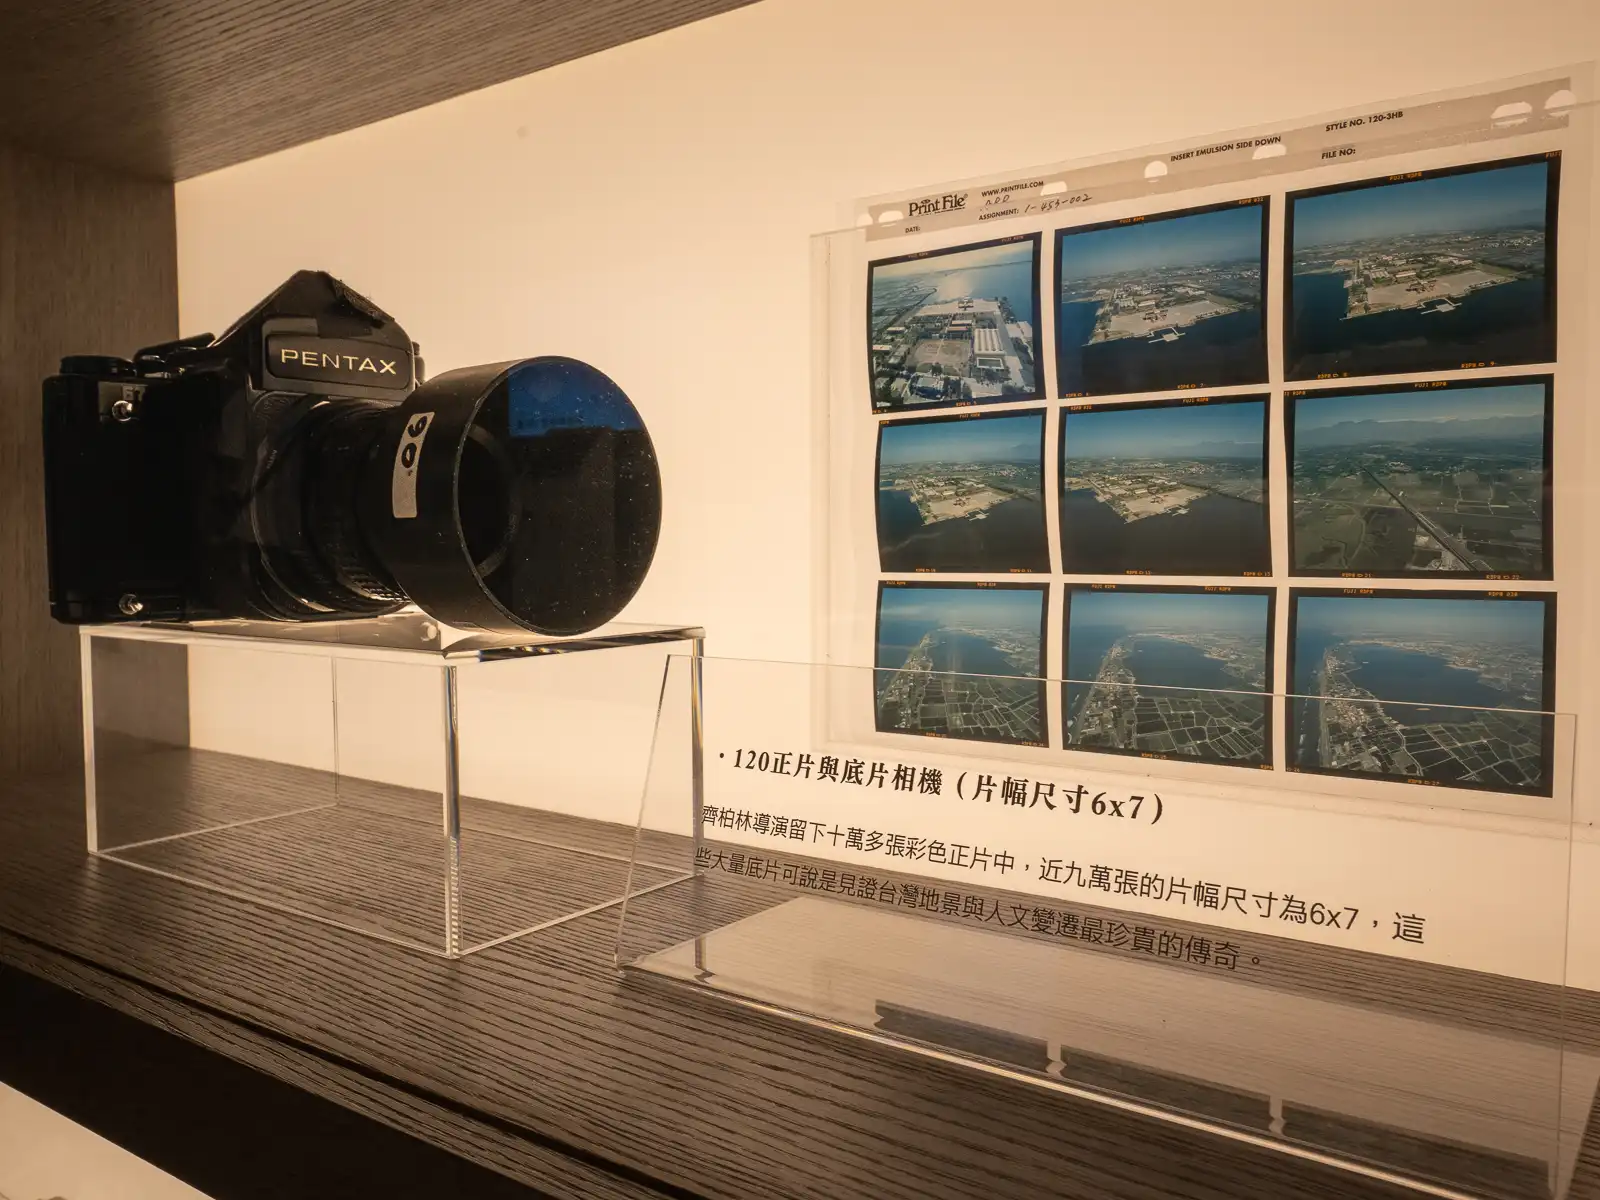 A medium format camera on display along with photos.